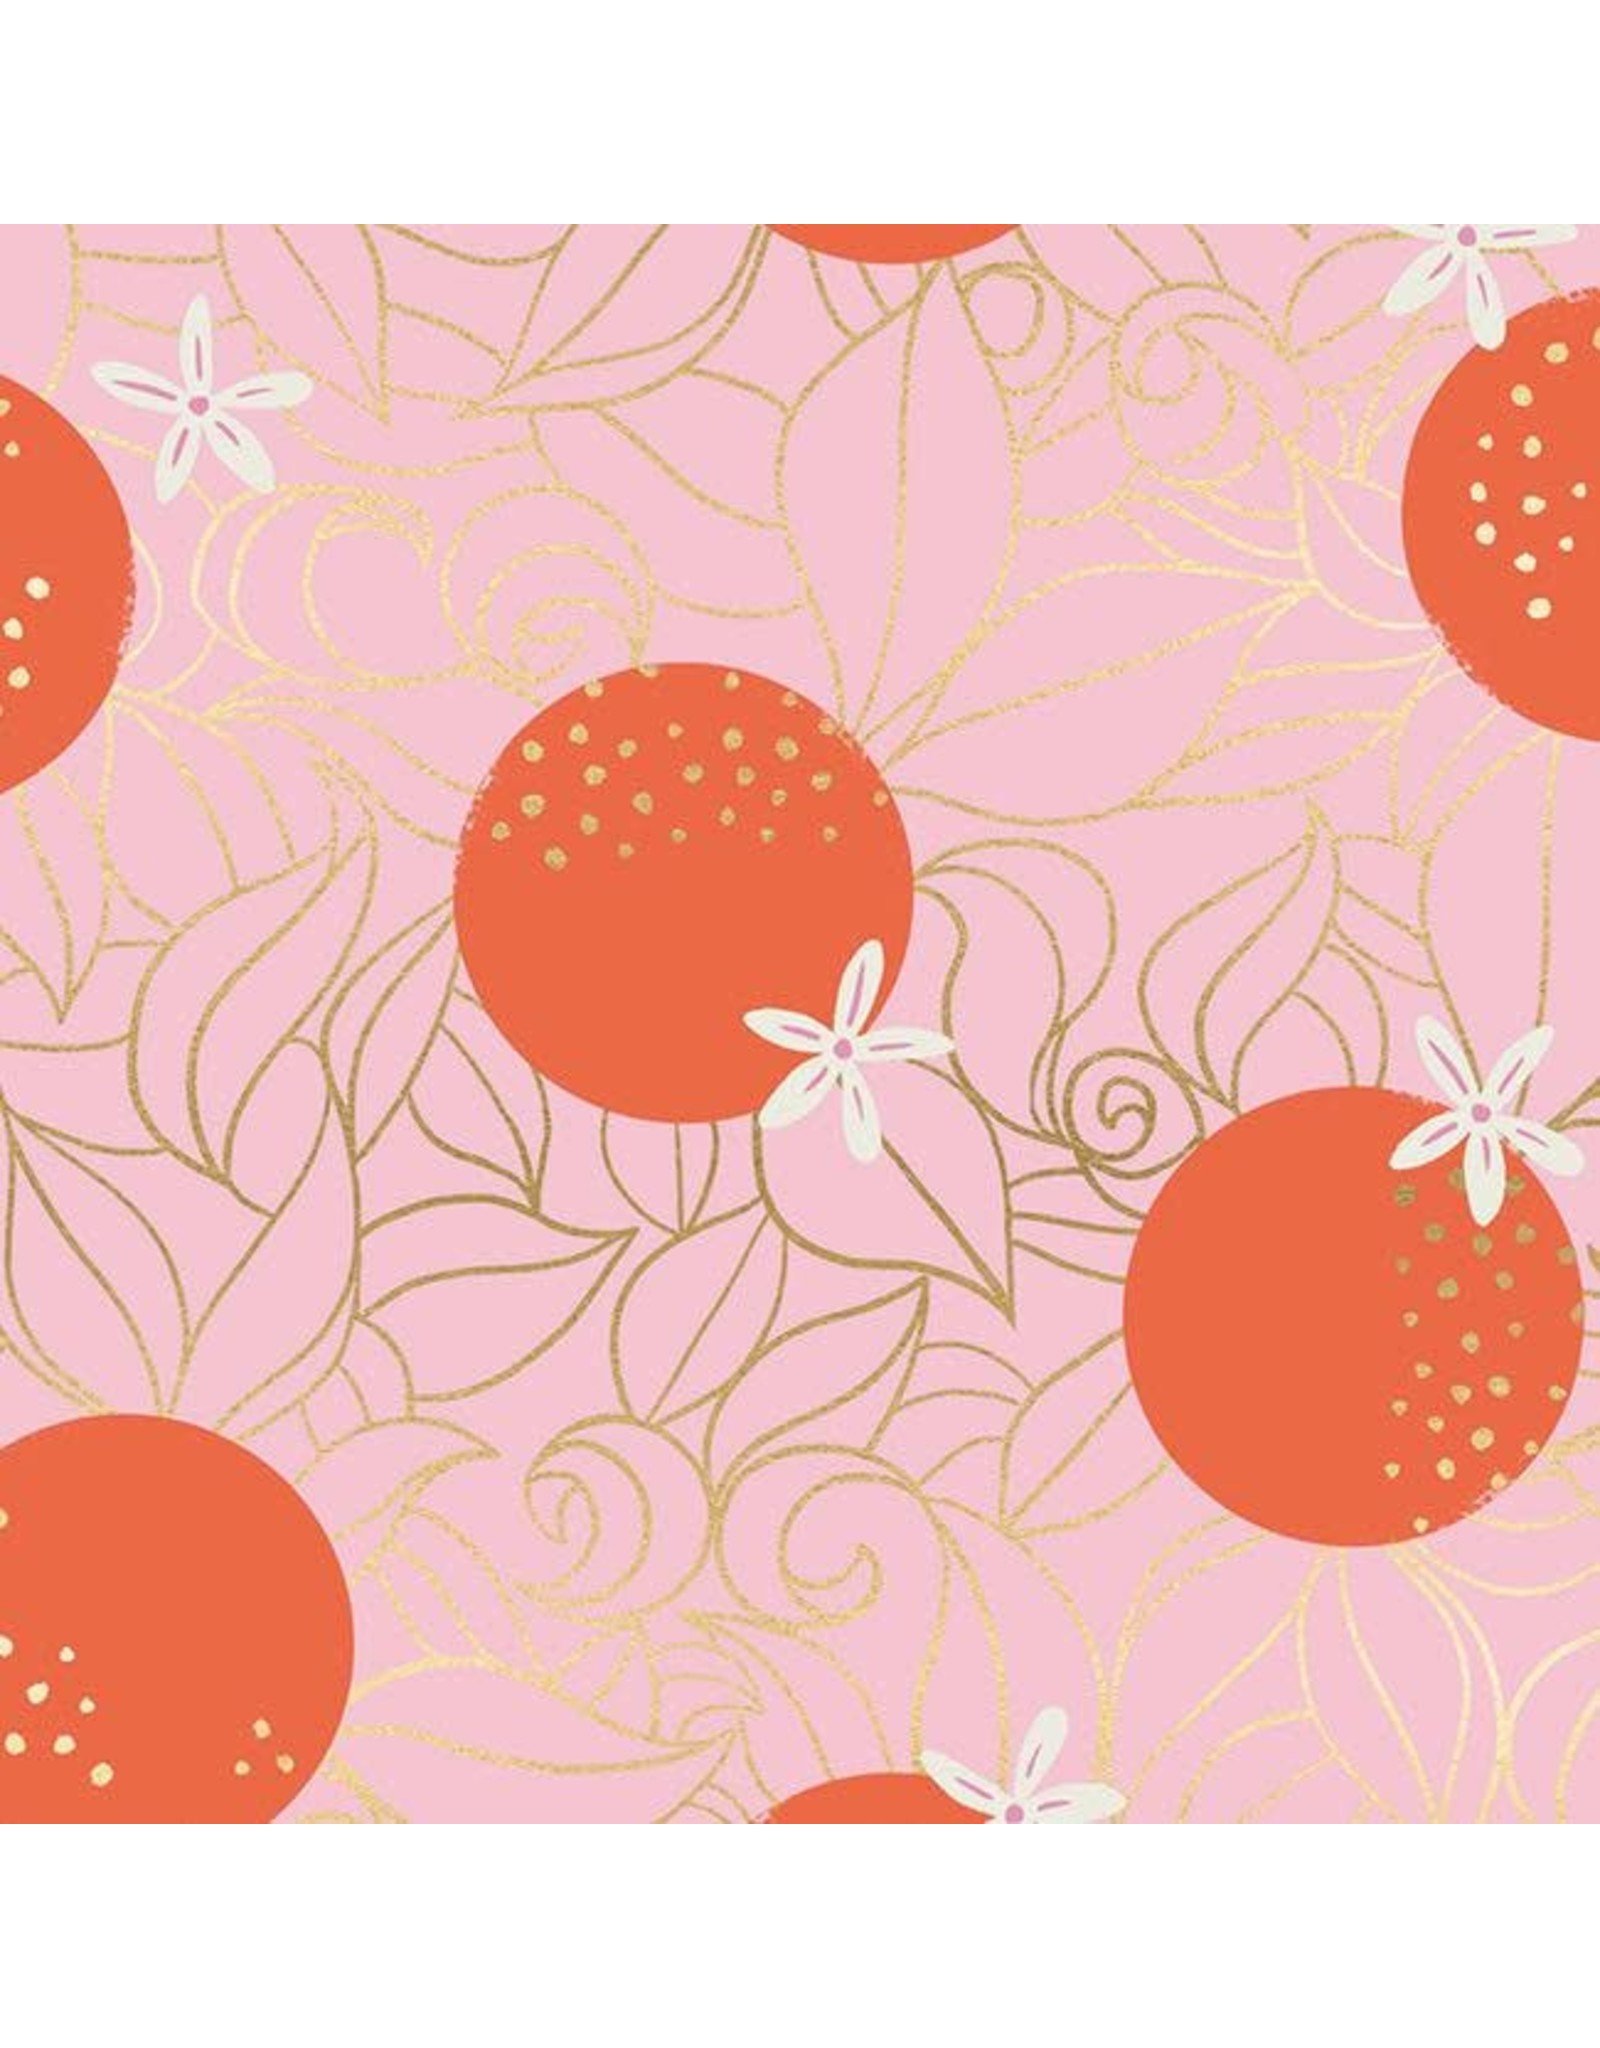 Sarah Watts Ruby Star Society, Florida, Orange Blossoms in Posy with Metallic, Fabric Half-Yards RS2025 12M